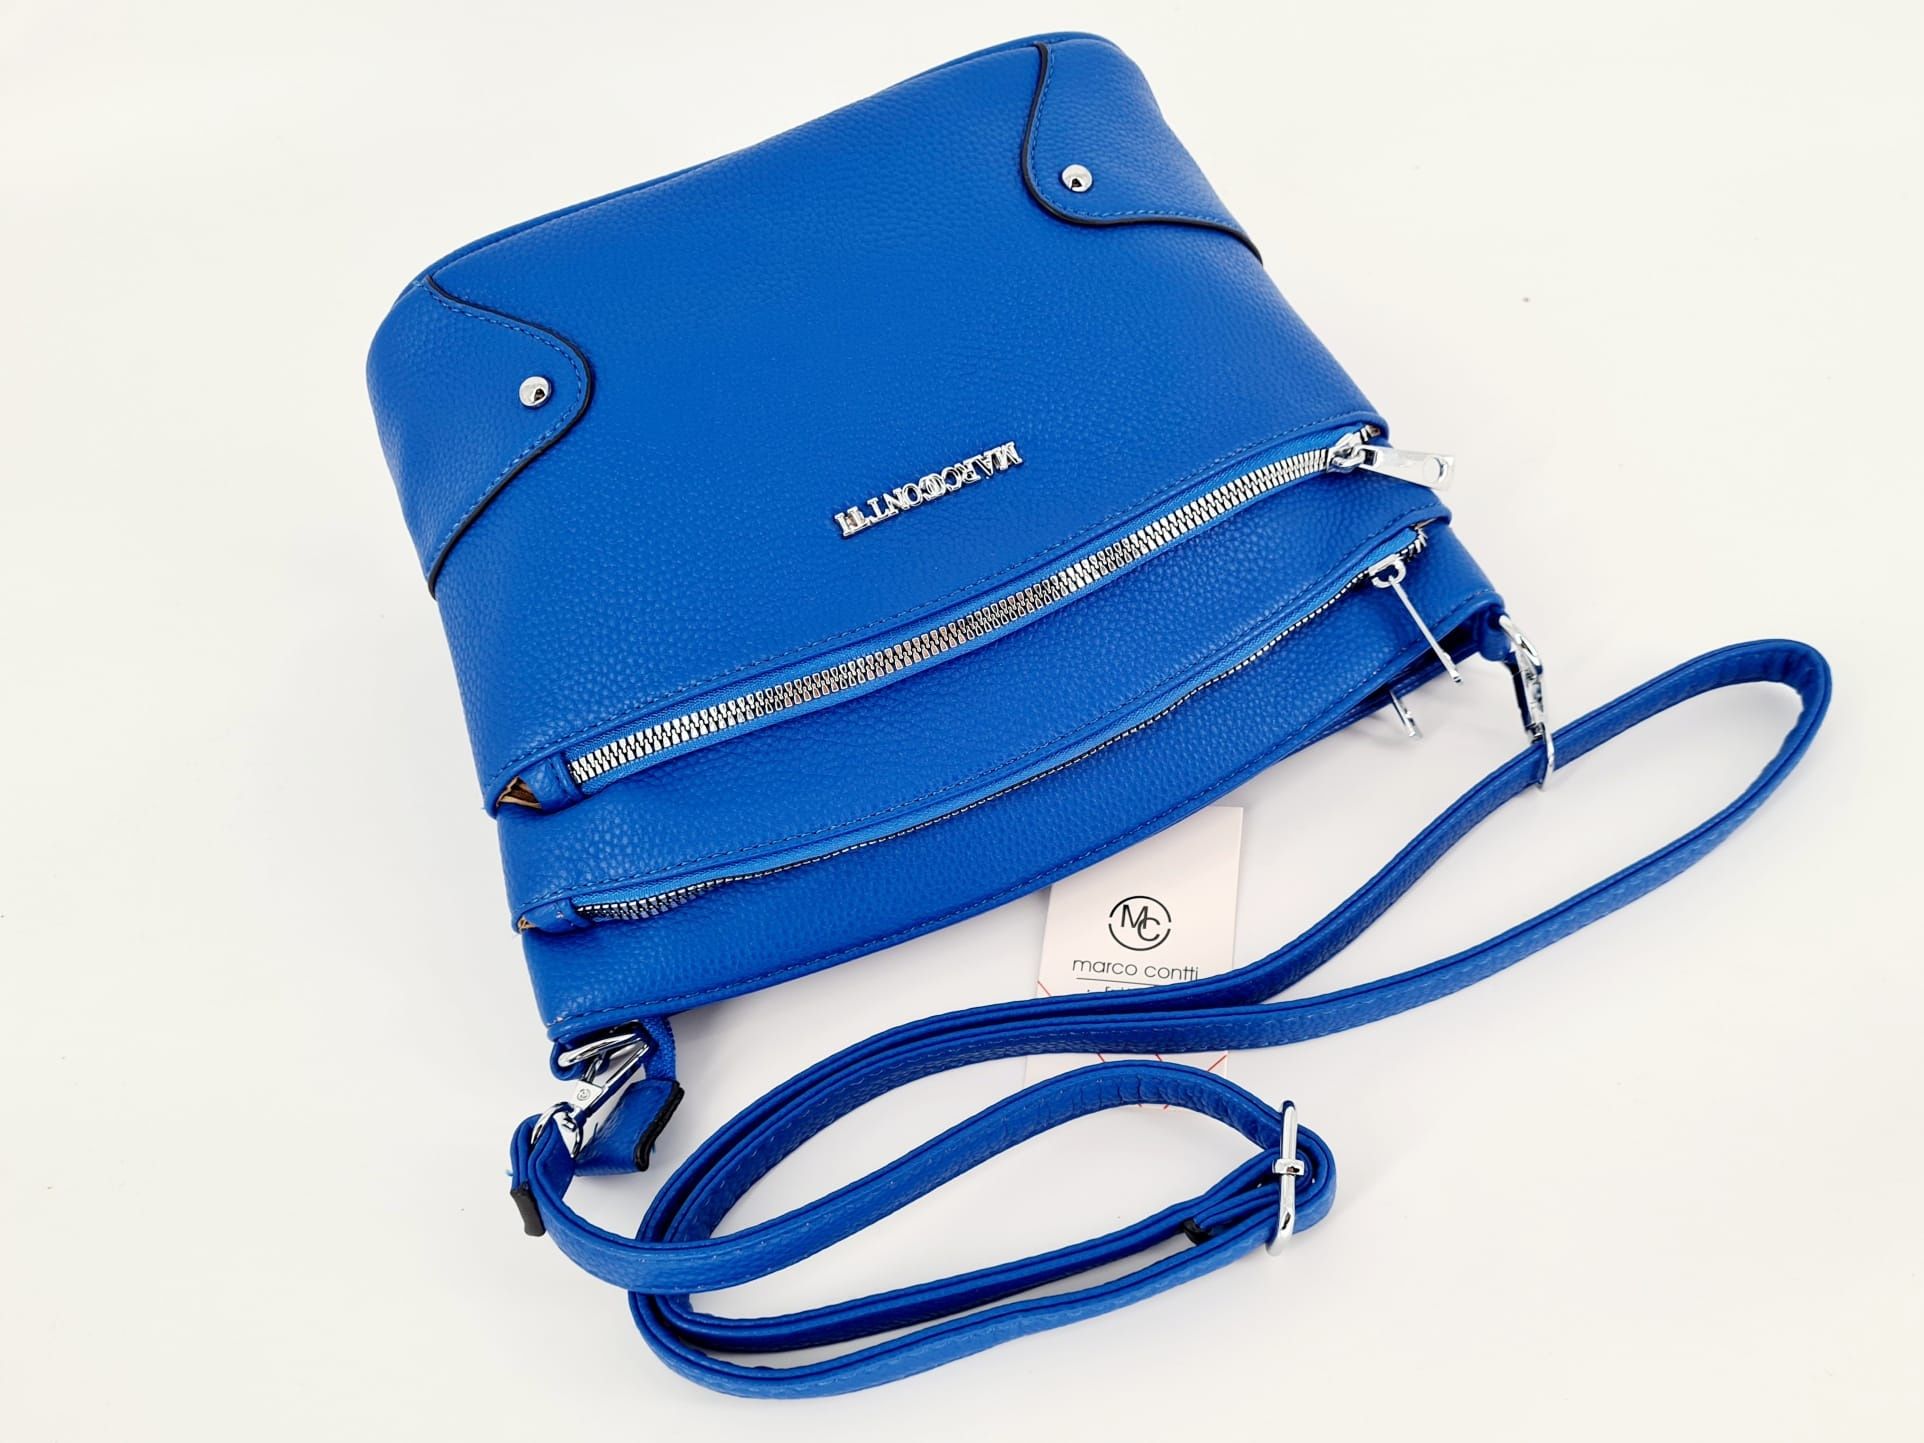 Damska torebka na ramię marki Marco Contti nowa kolor niebieski